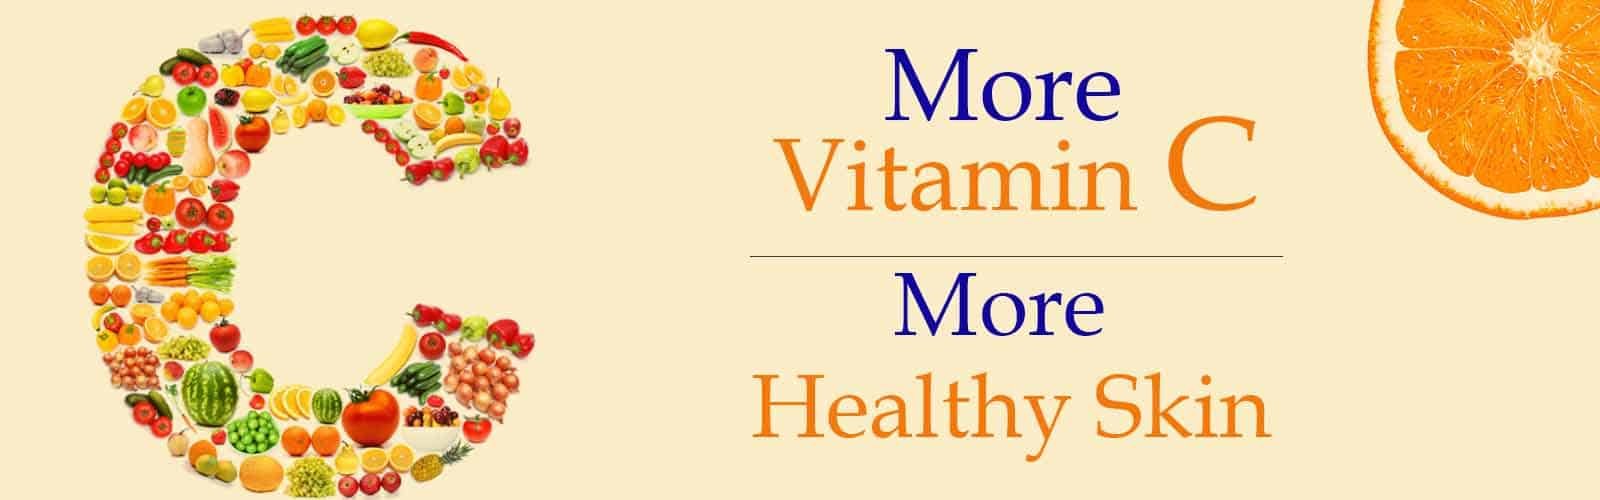 Benefits of Vitamin C for Skin